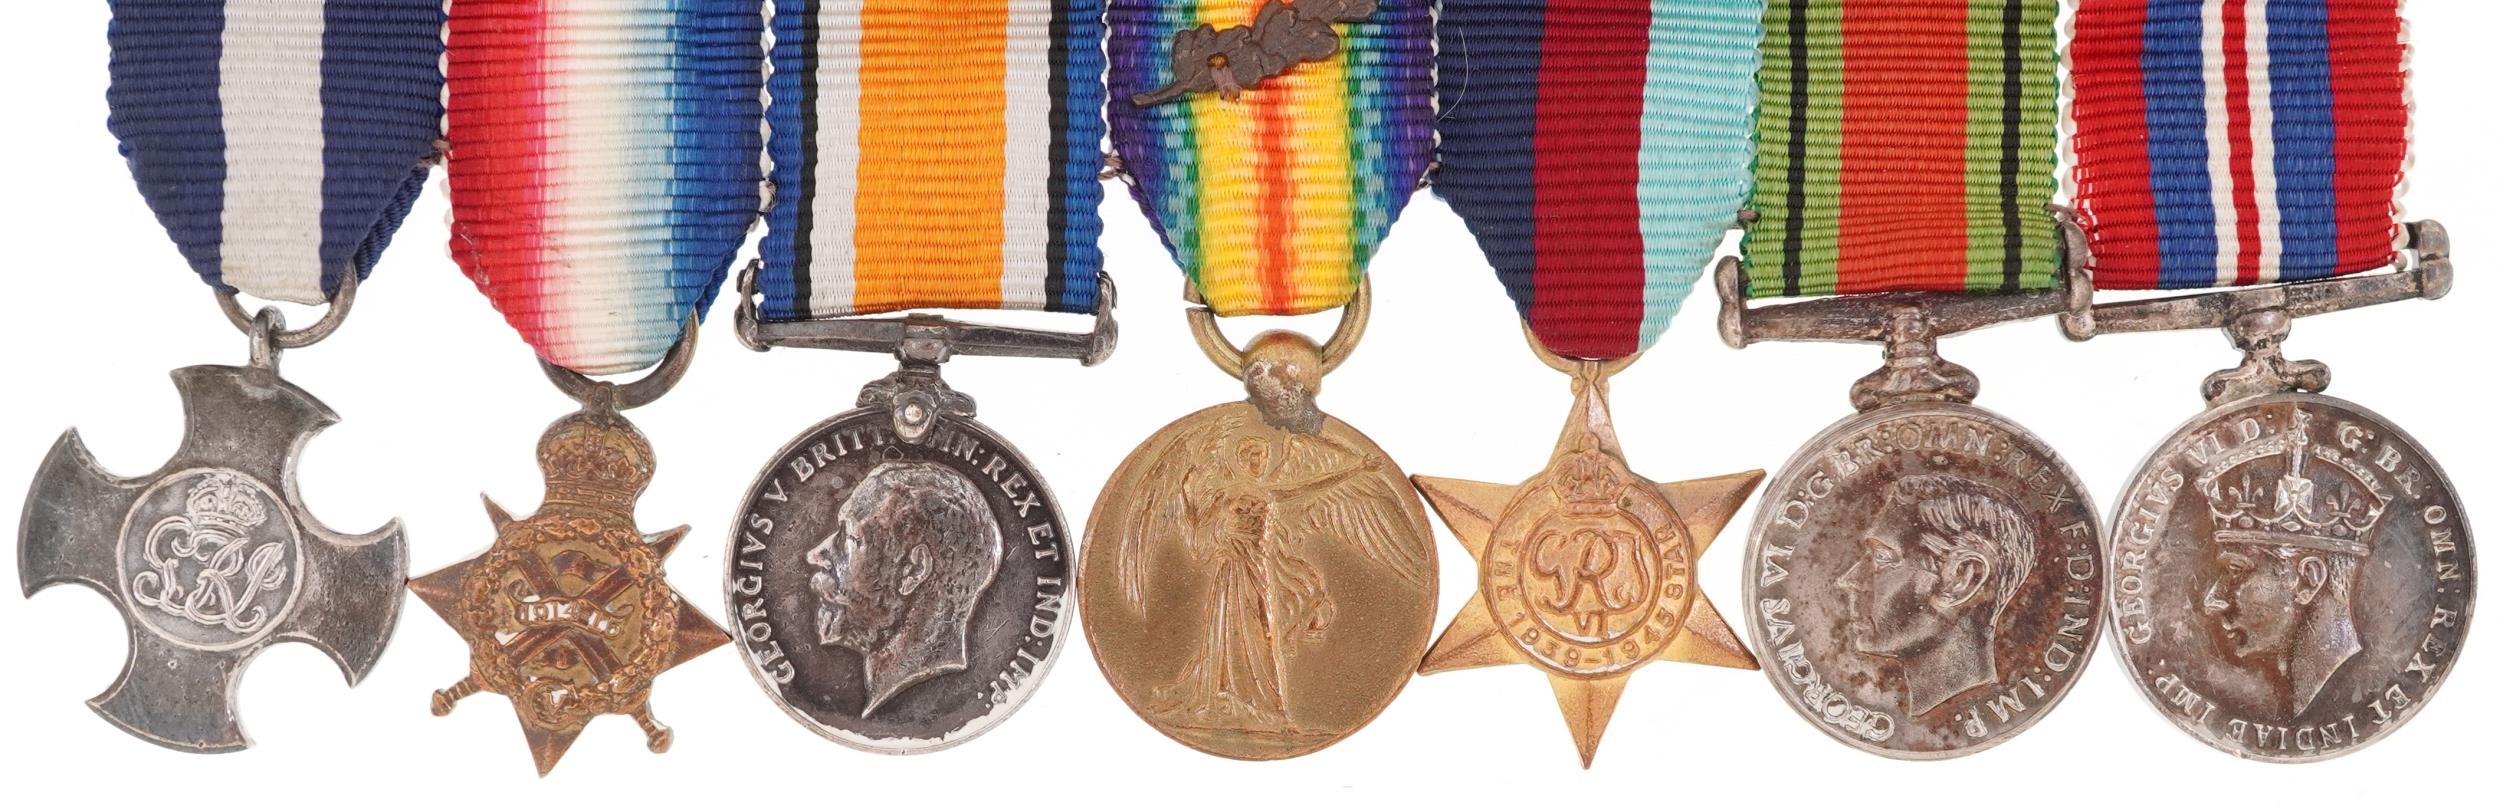 British military World War I dress medals including Distinguished Service Cross